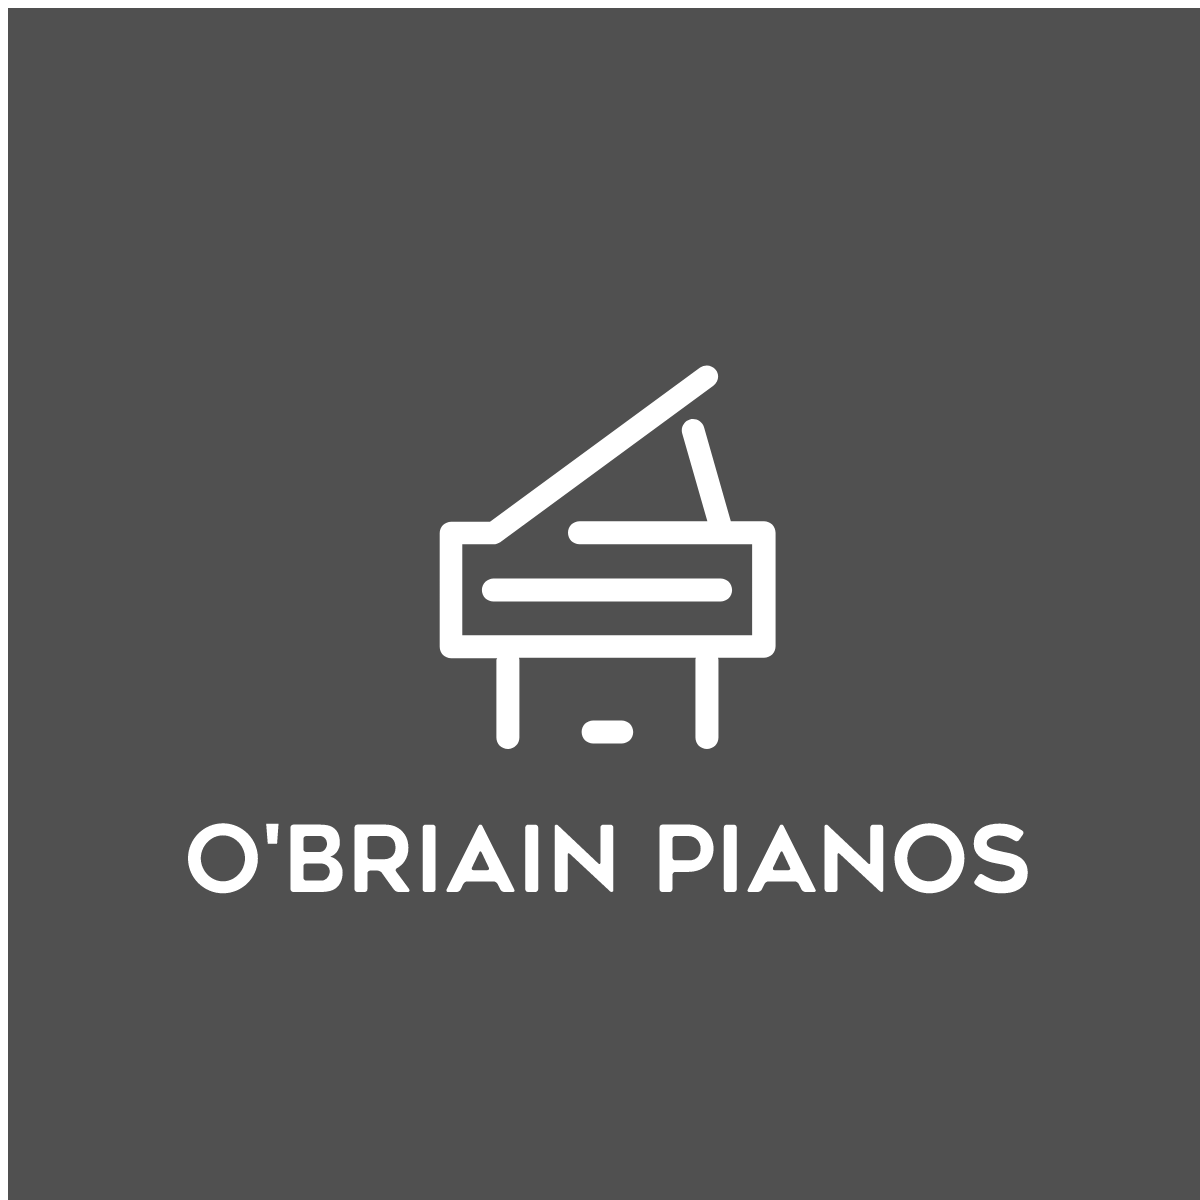 George Steck-O'Briain Pianos